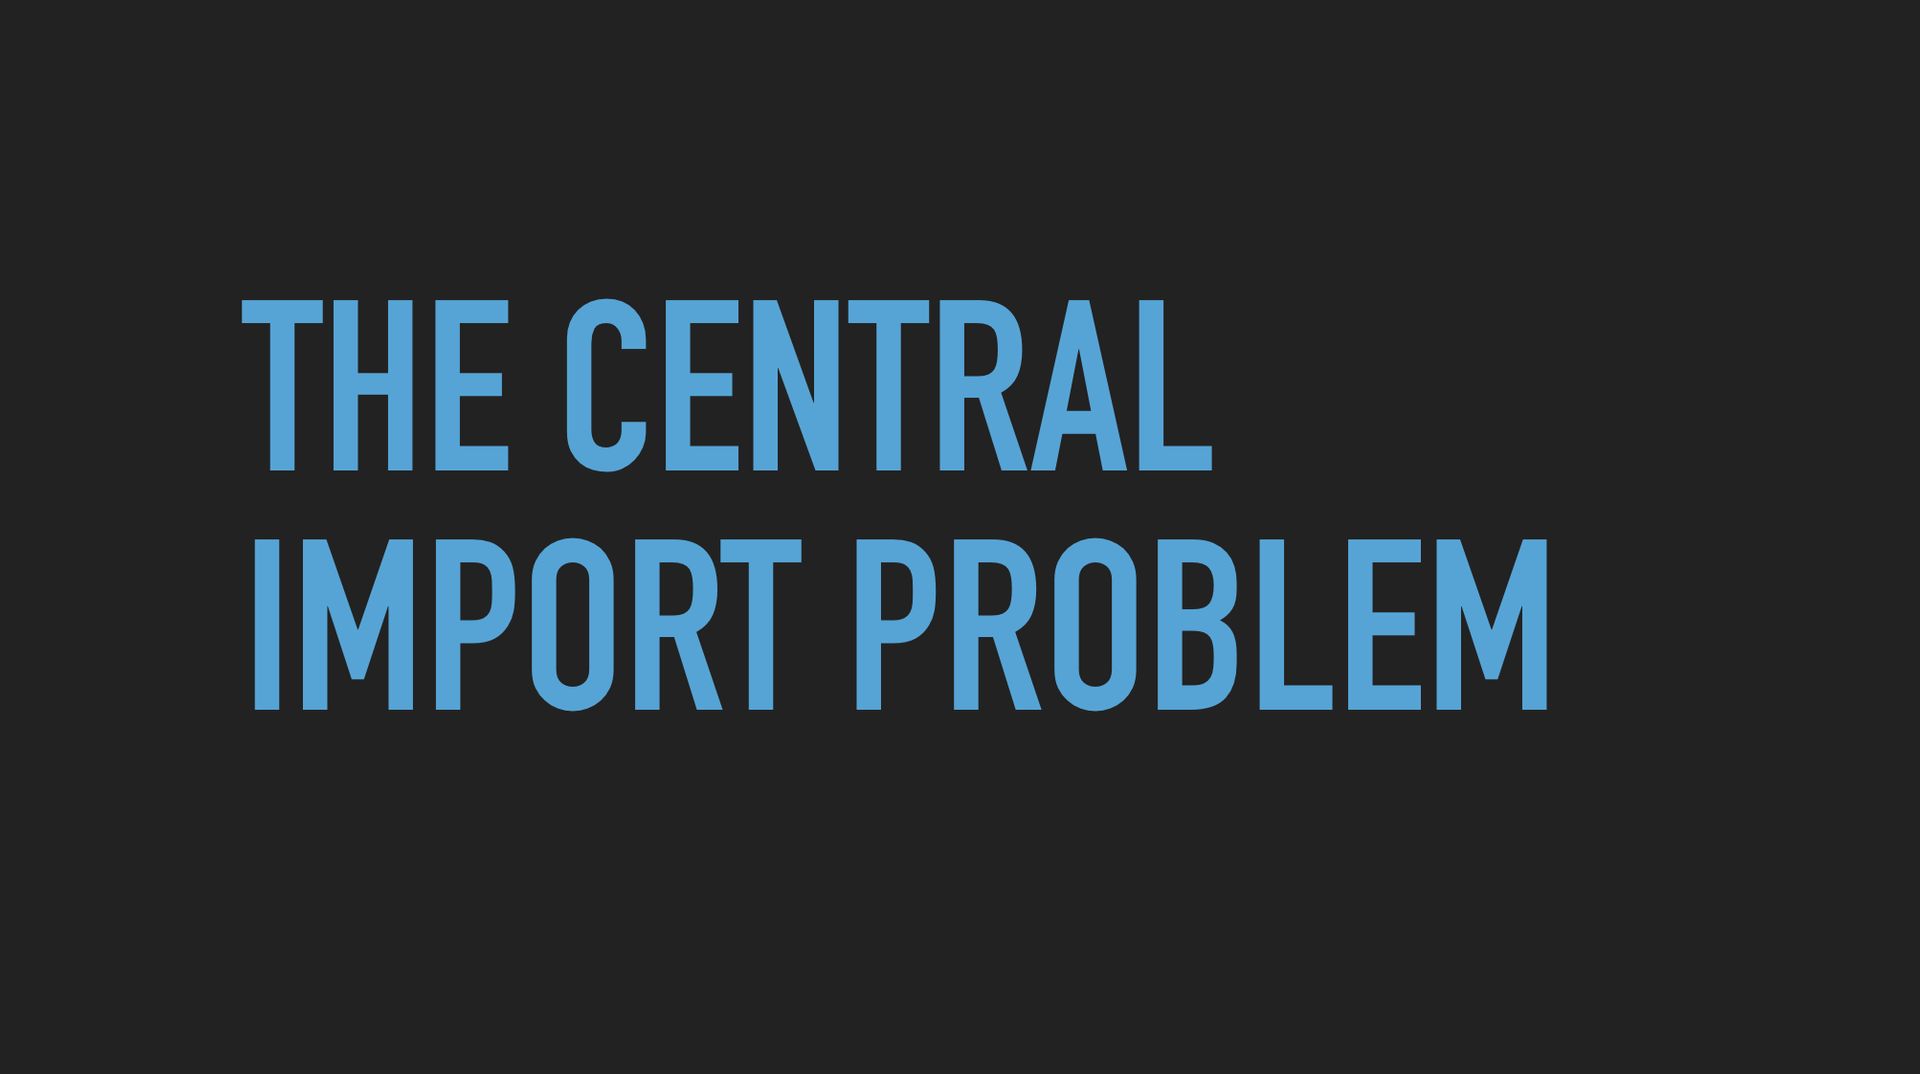 Slide text: The central import problem.